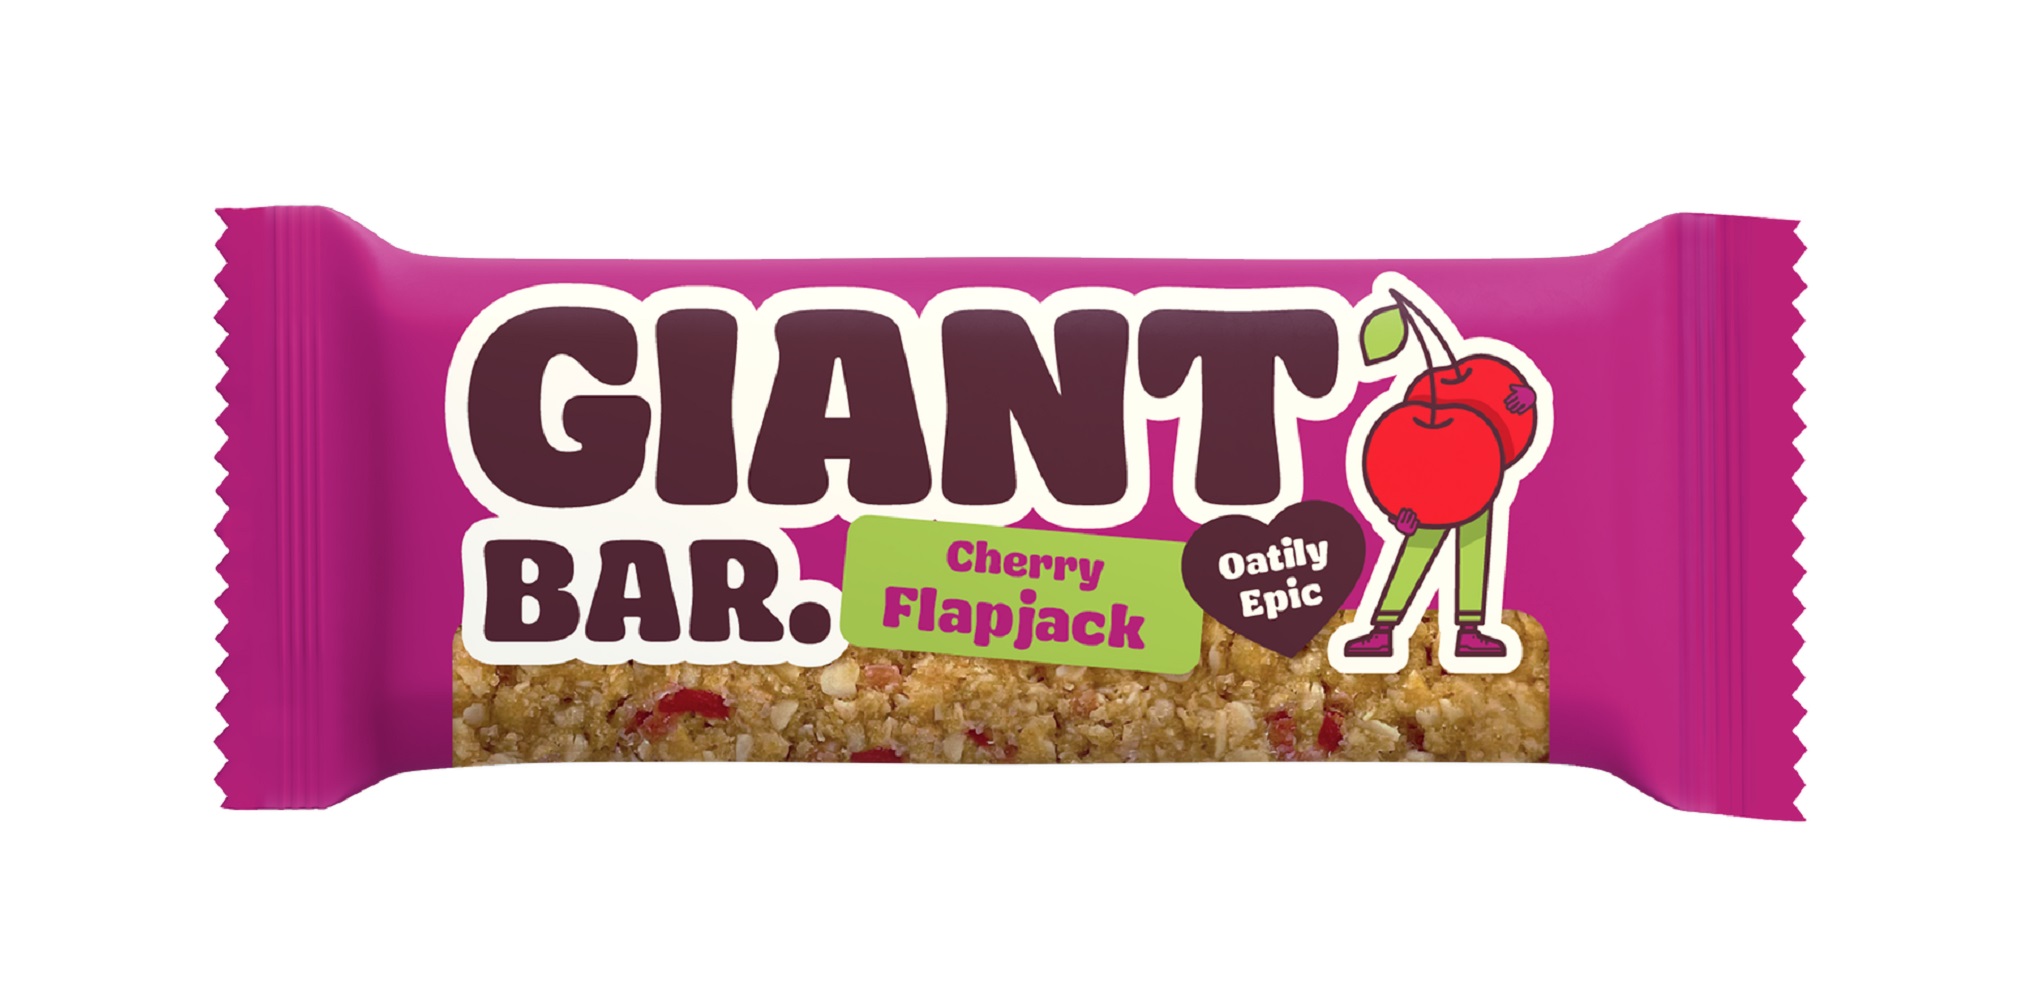 Giant Bar Cherry